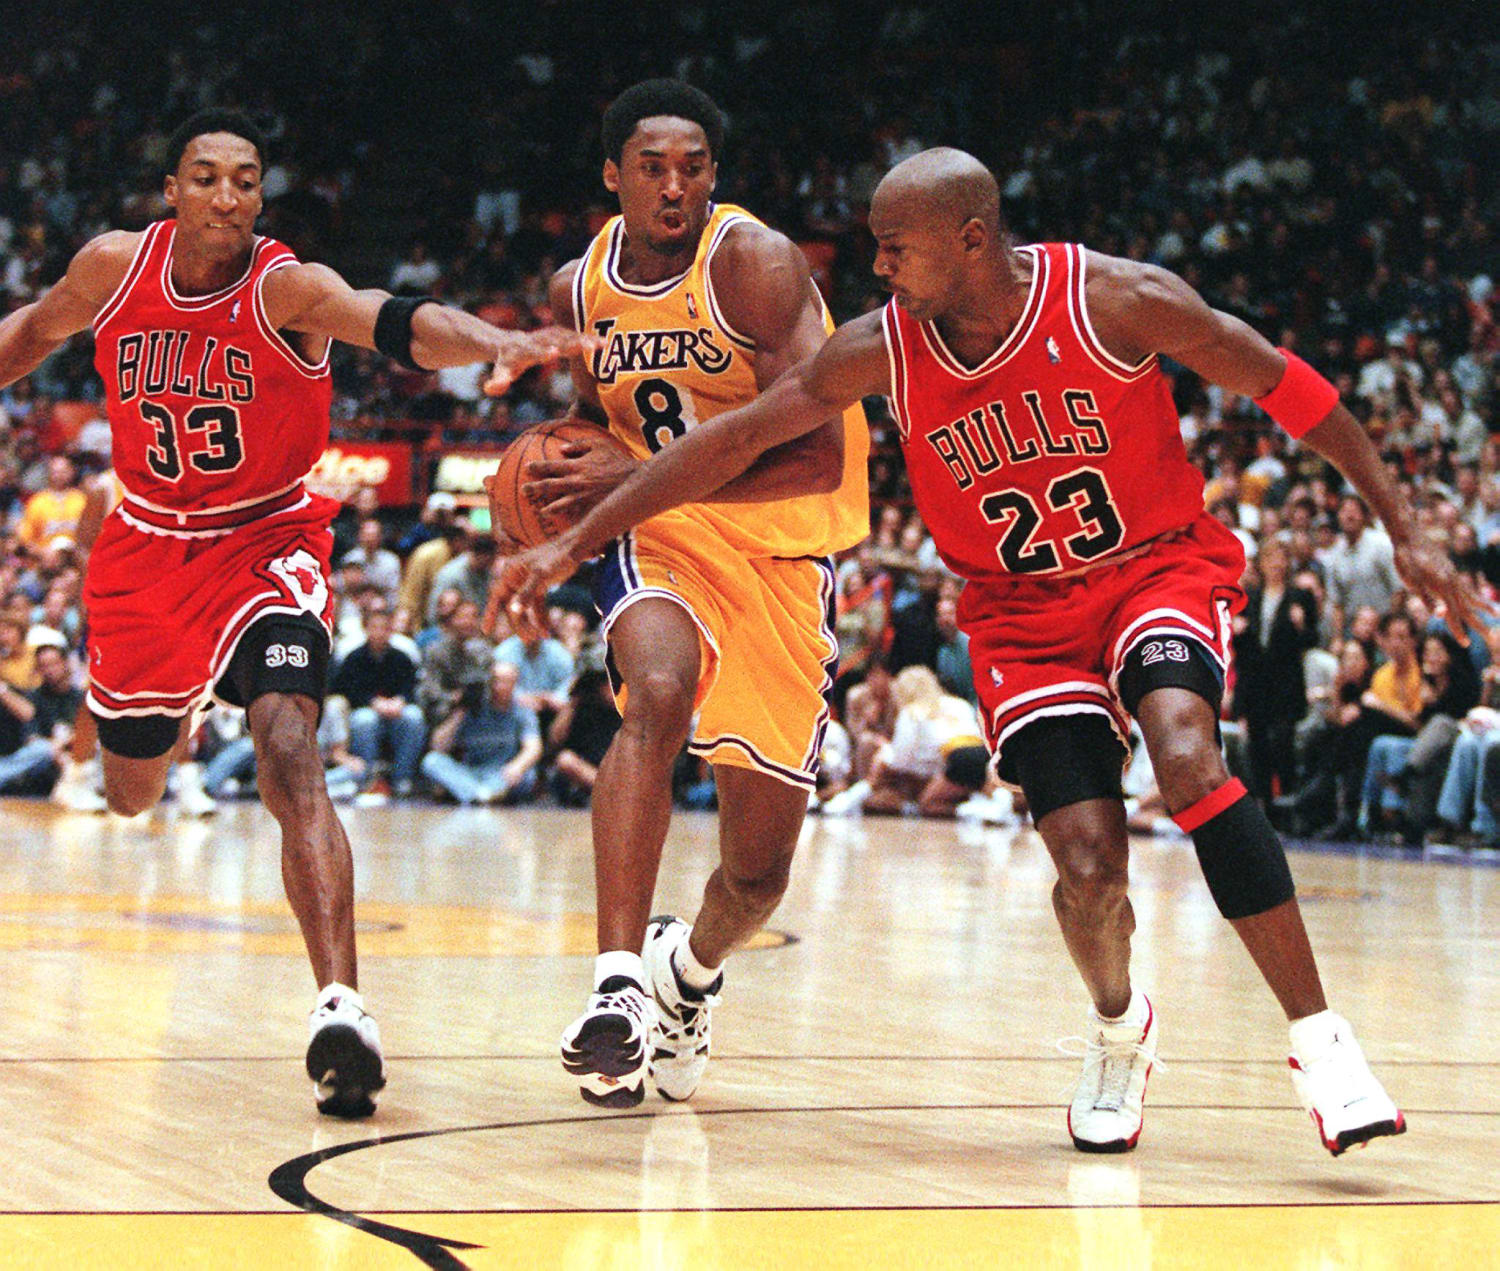 Michael Jordan vs Kobe Bryant who is the greatest? : r/BasketballGM